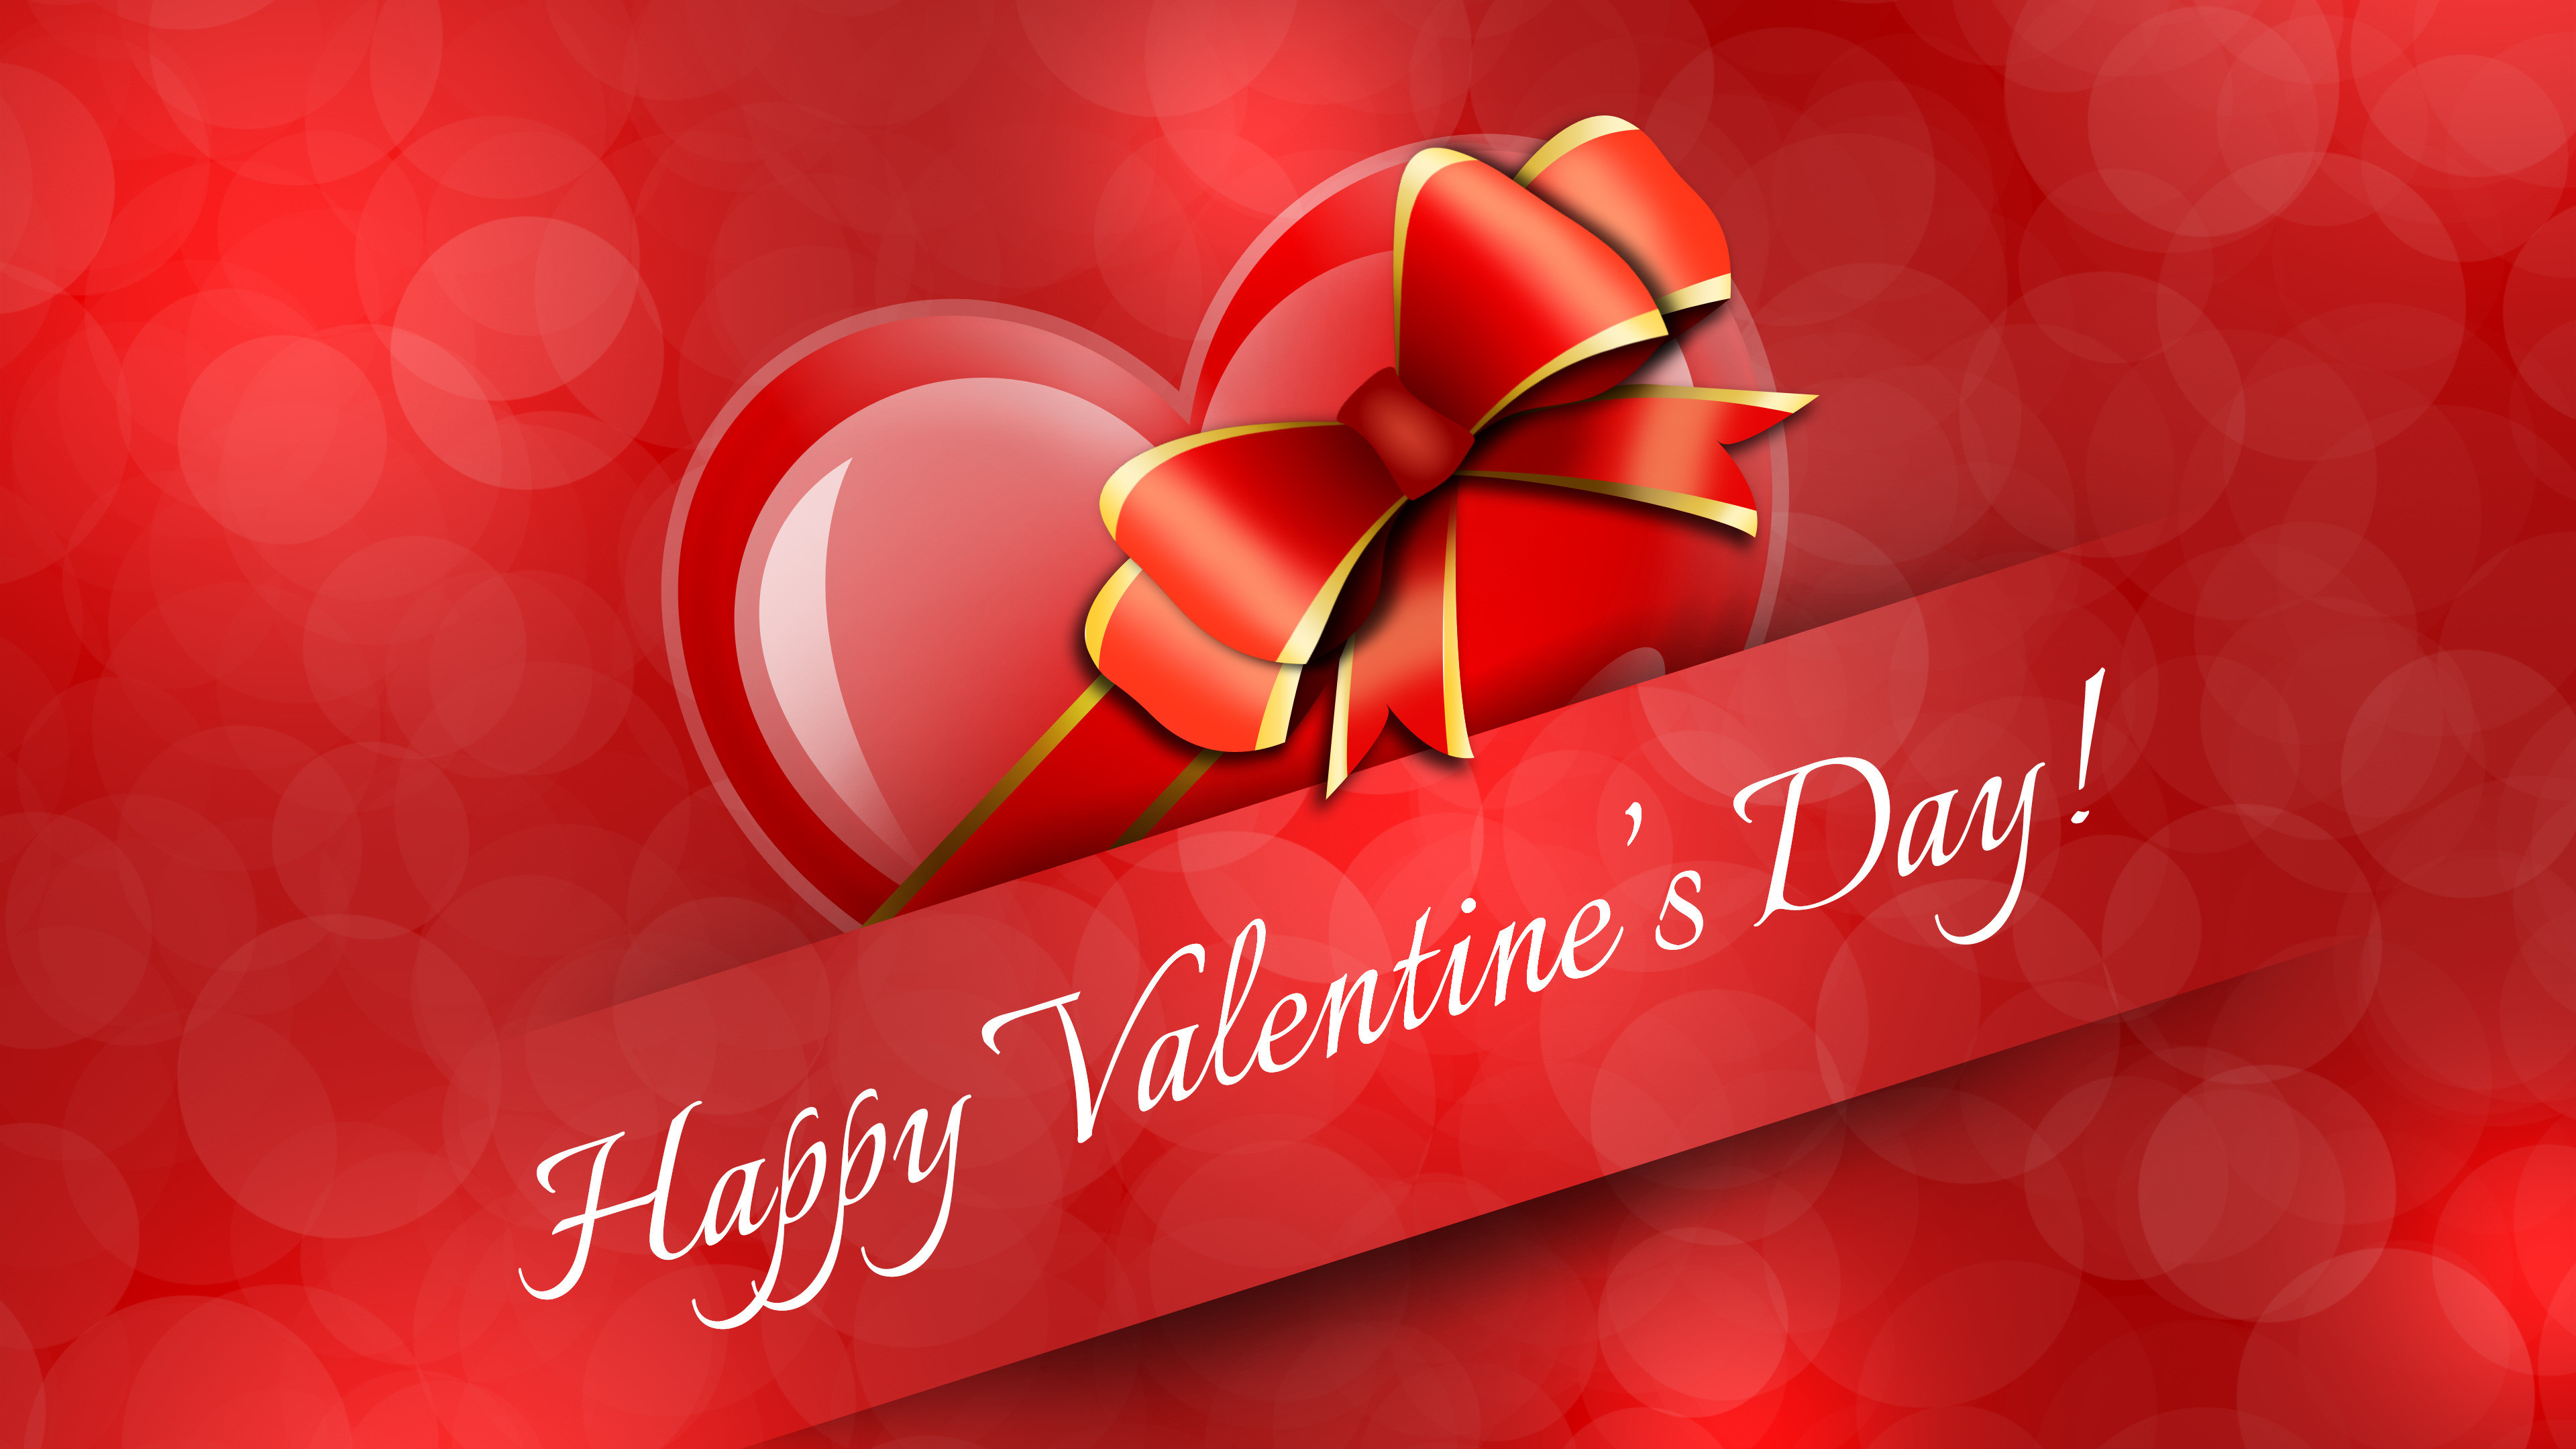 3840x2160 Valentine Day Images